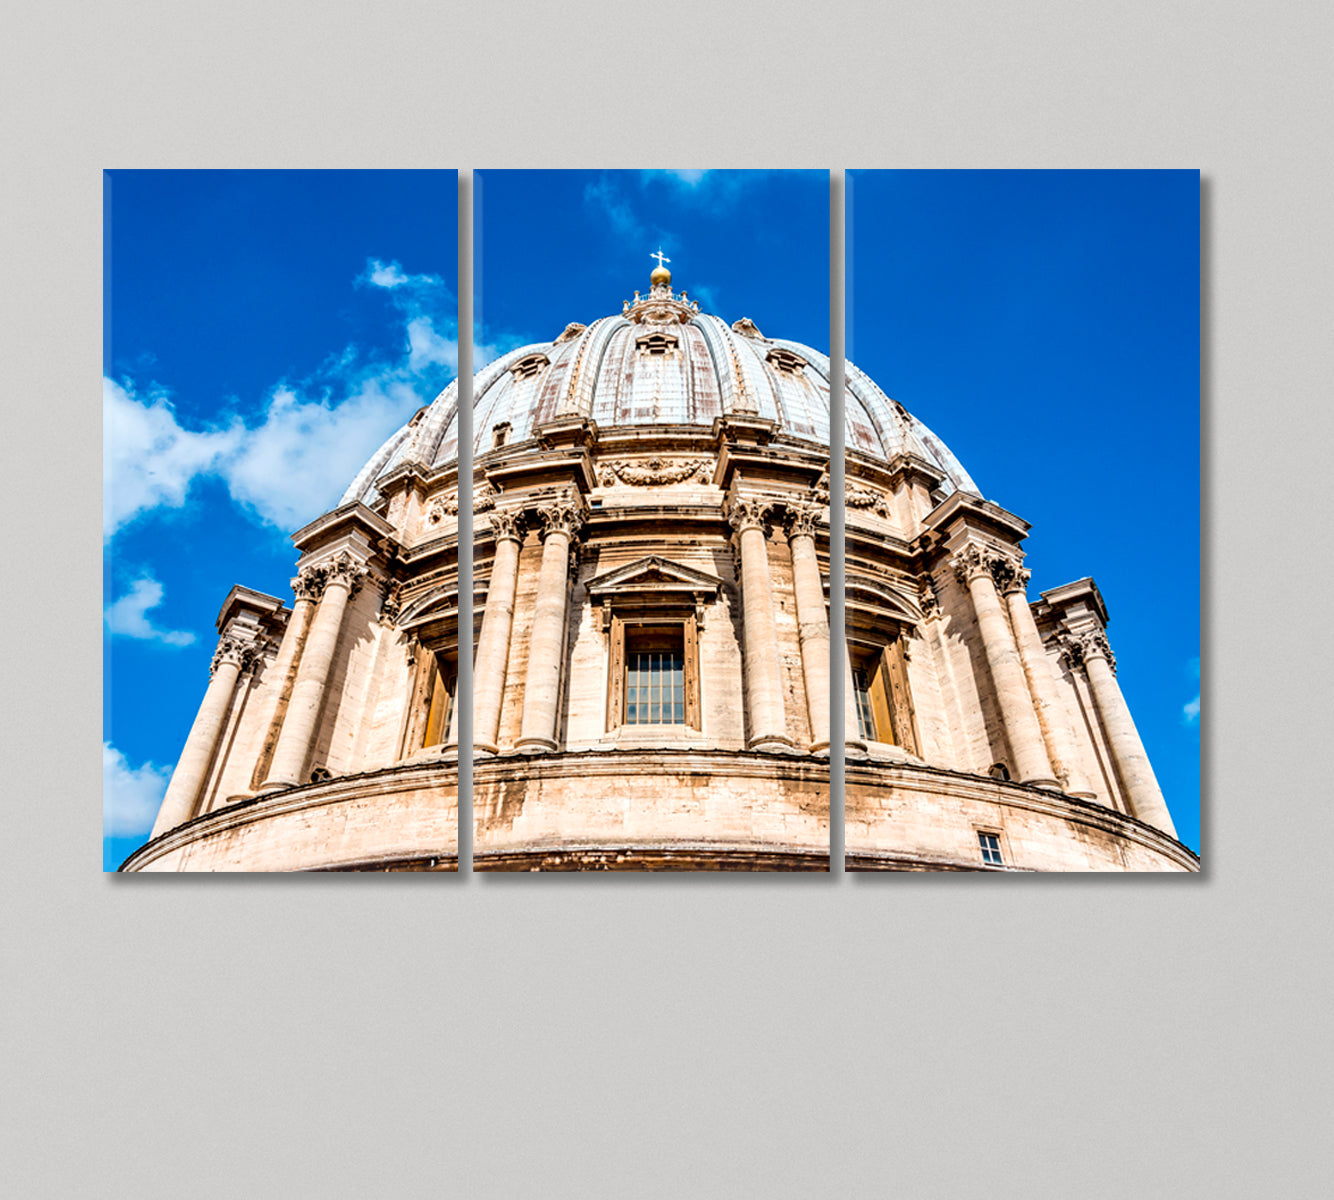 Dome of St. Peter's Basilica Vatican Italy Canvas Print-Canvas Print-CetArt-3 Panels-36x24 inches-CetArt